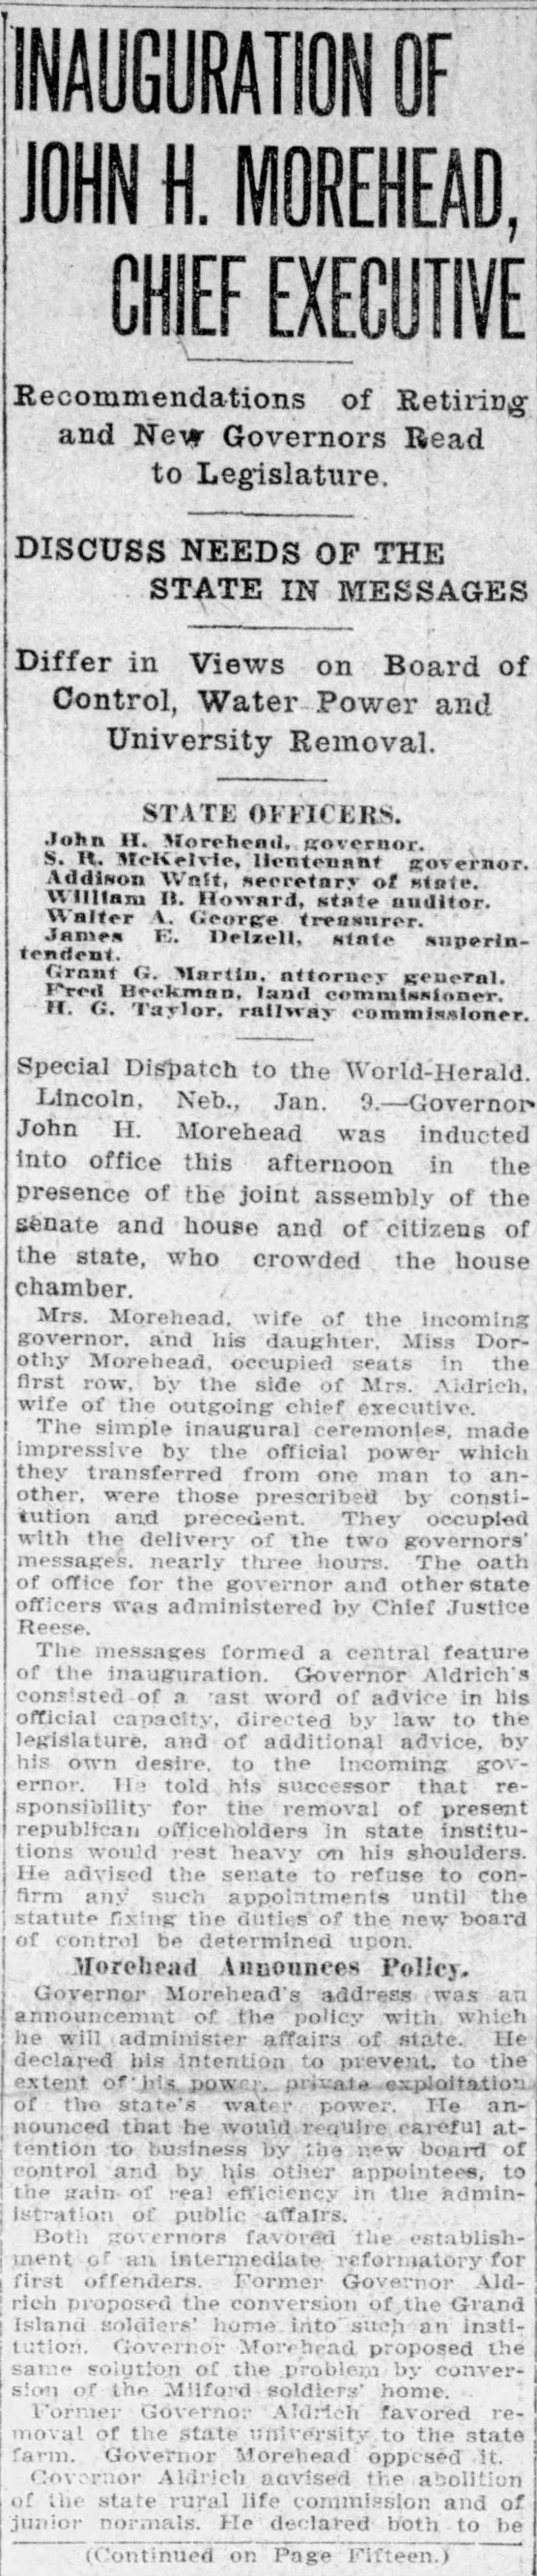 Inauguration of John H. Morehead, Chief Executive